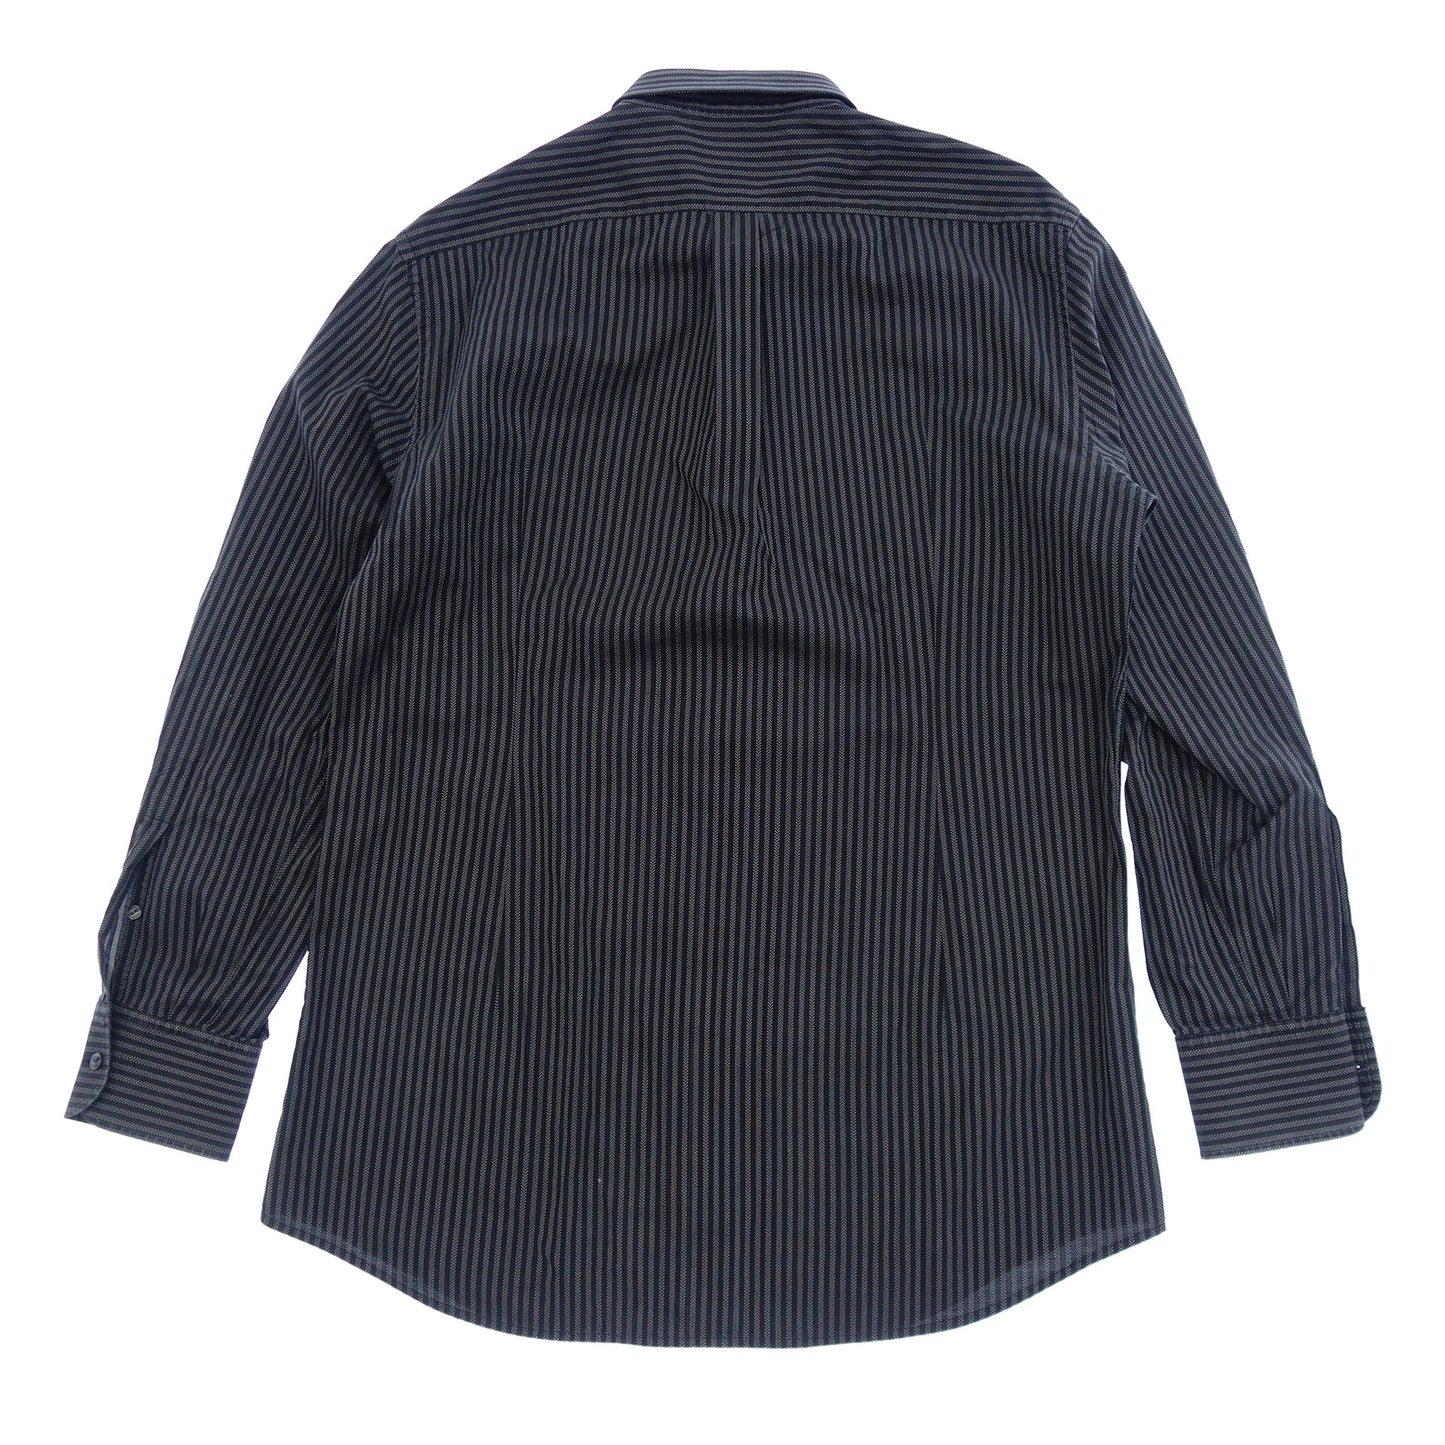 状况良好◆Dolce &amp; Gabbana 长袖条纹衬衫男式黑色尺寸 41 DOLCE&amp;GABBANA [AFB29] 